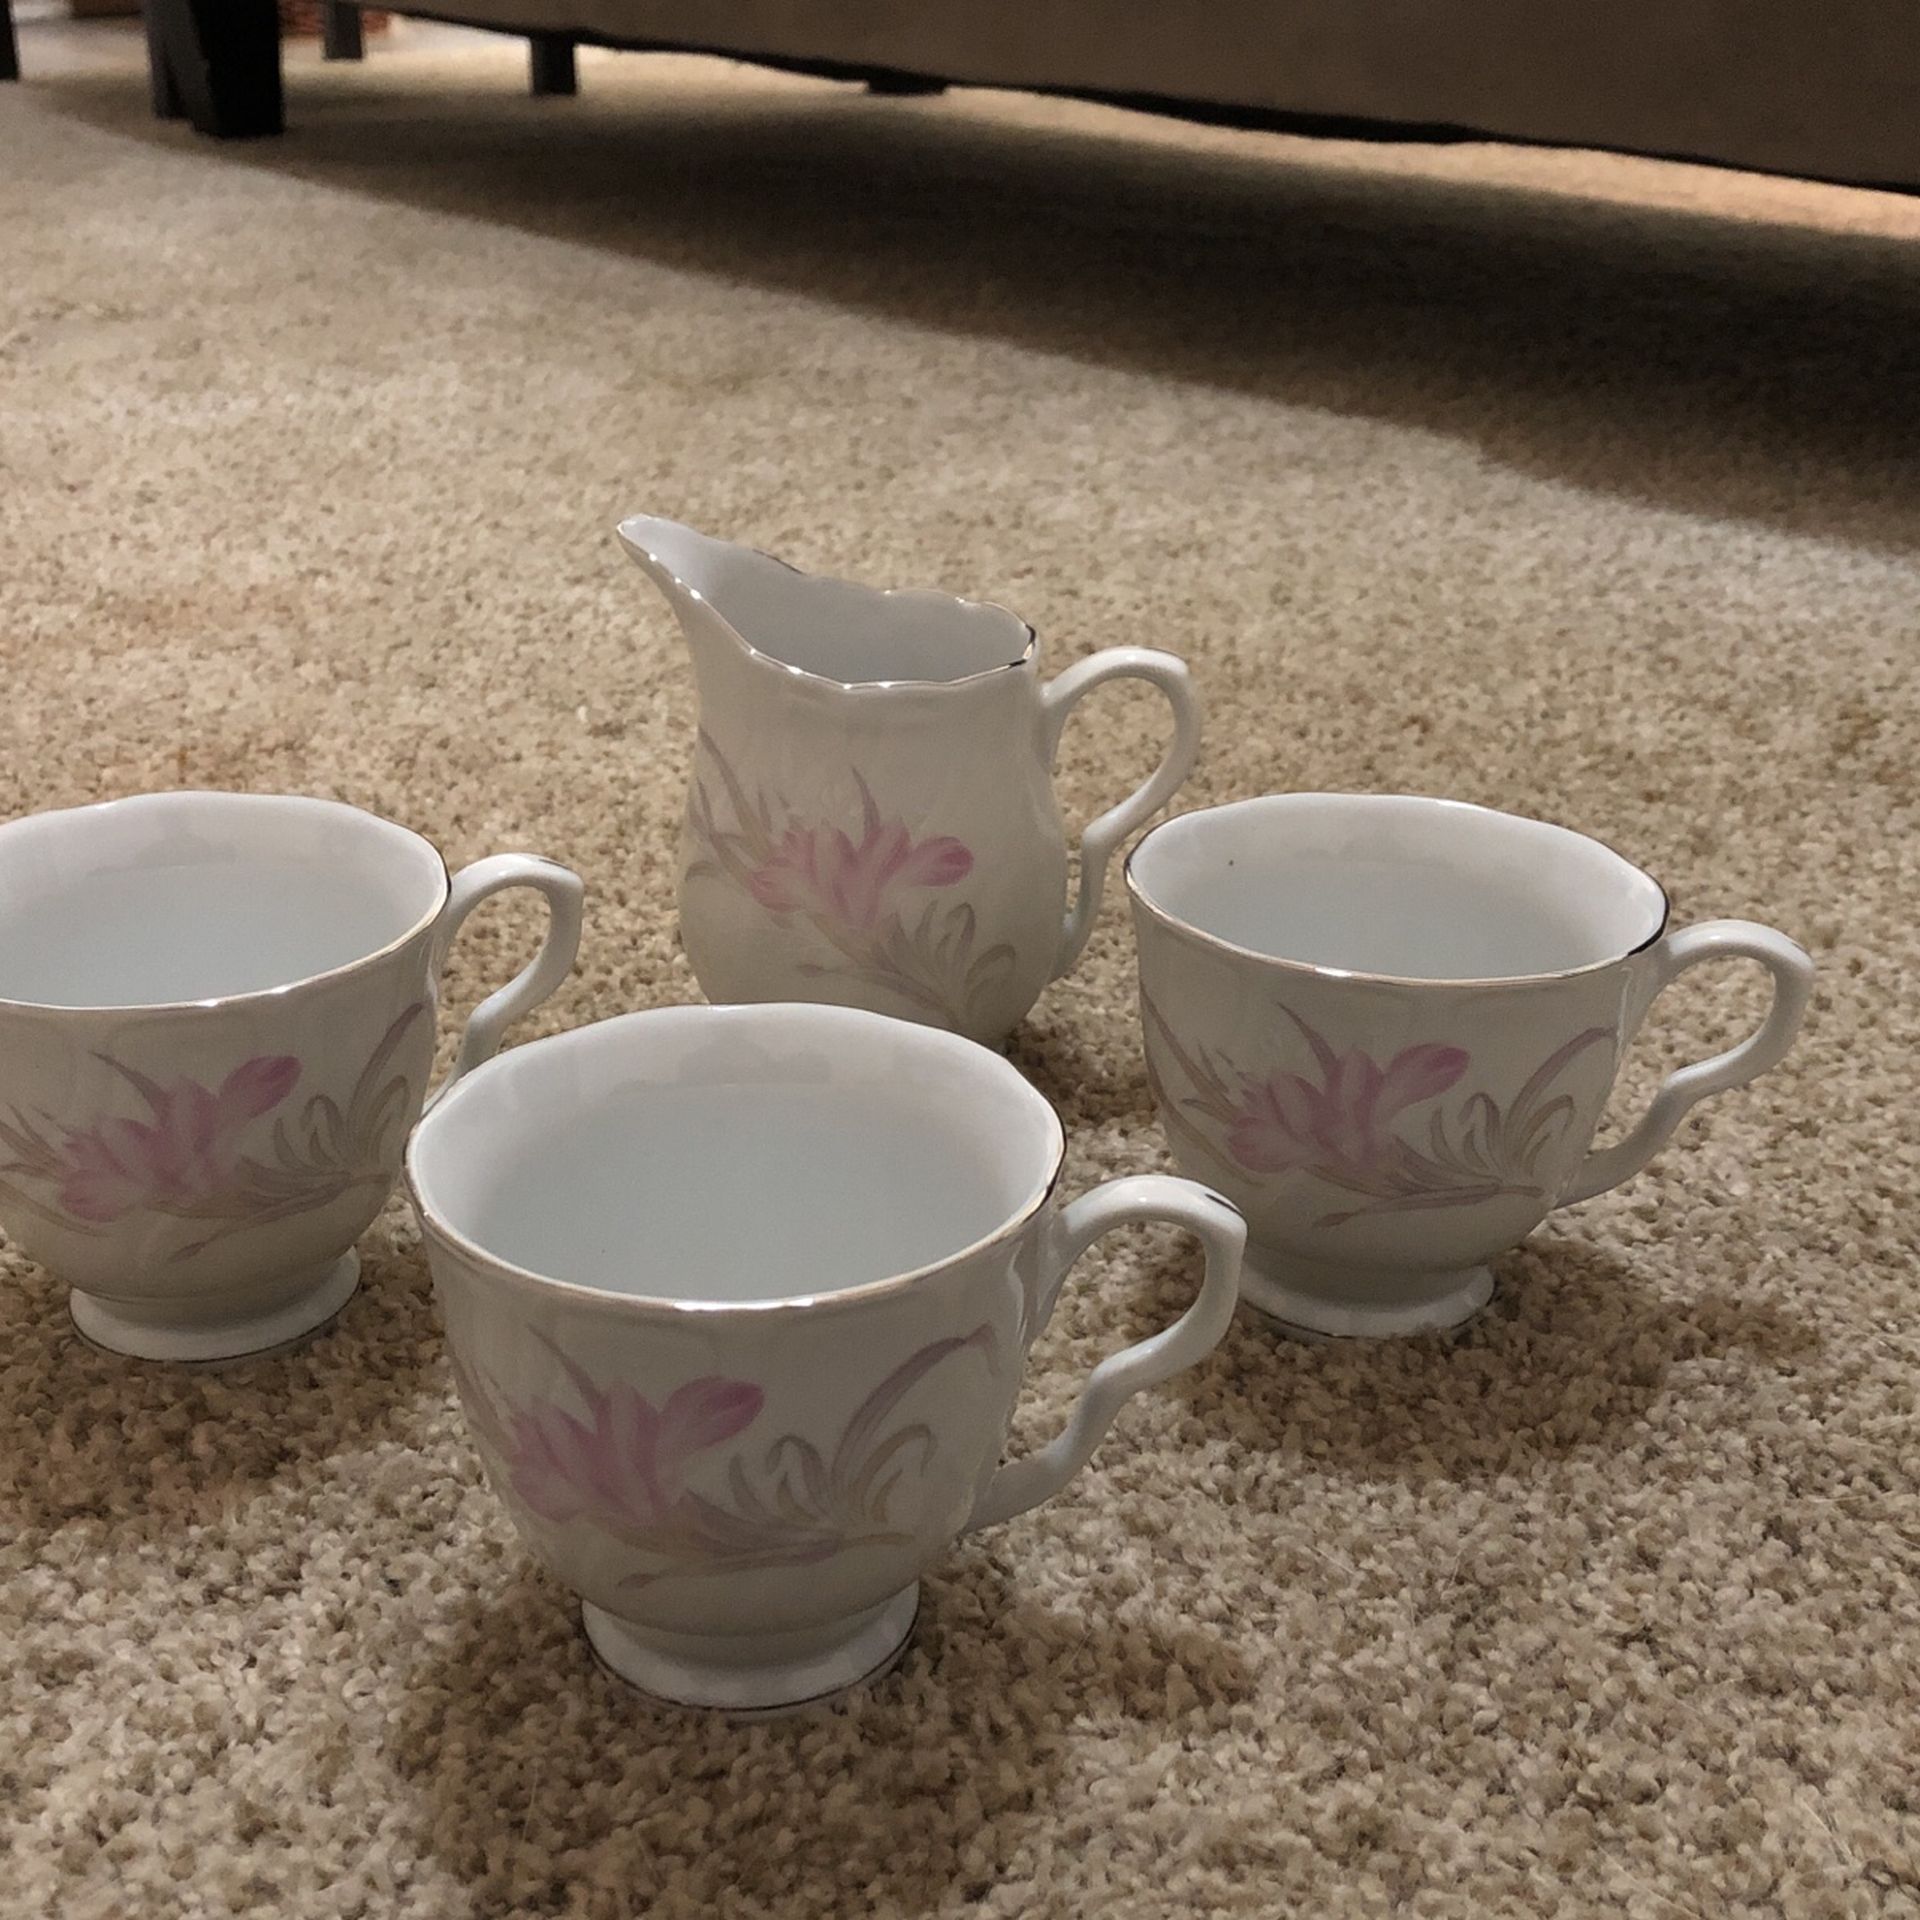 3 Tea Cups and milk China